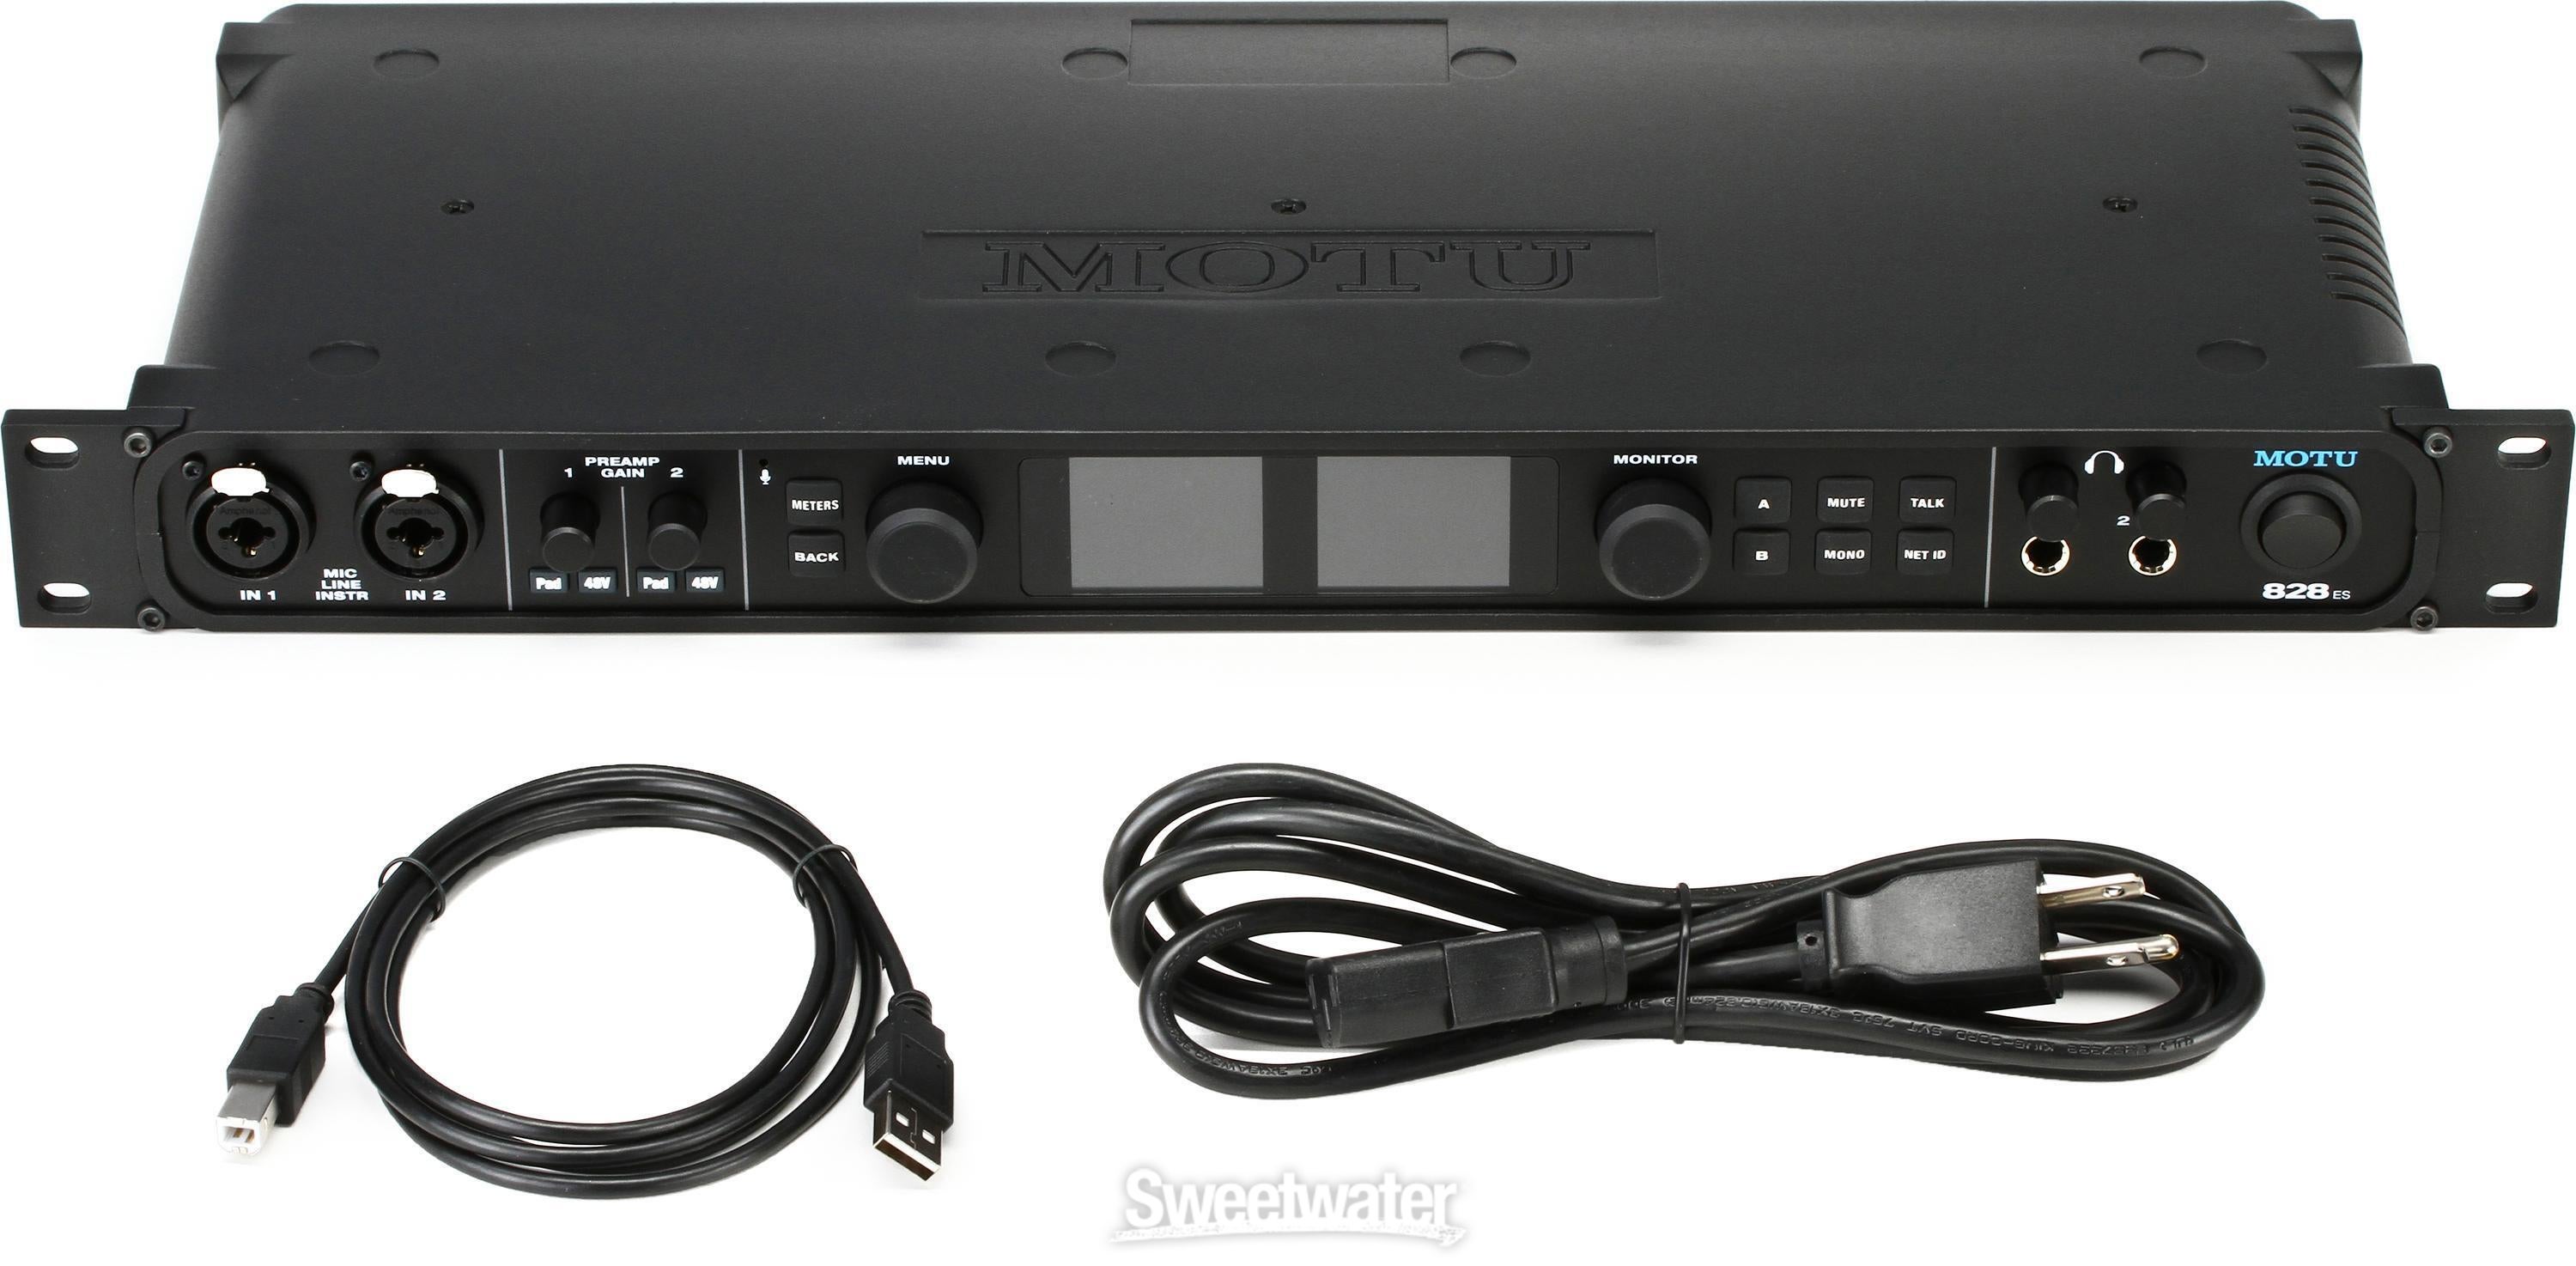 MOTU 828es 28x32 Thunderbolt / USB 2.0 Audio Interface Reviews ...